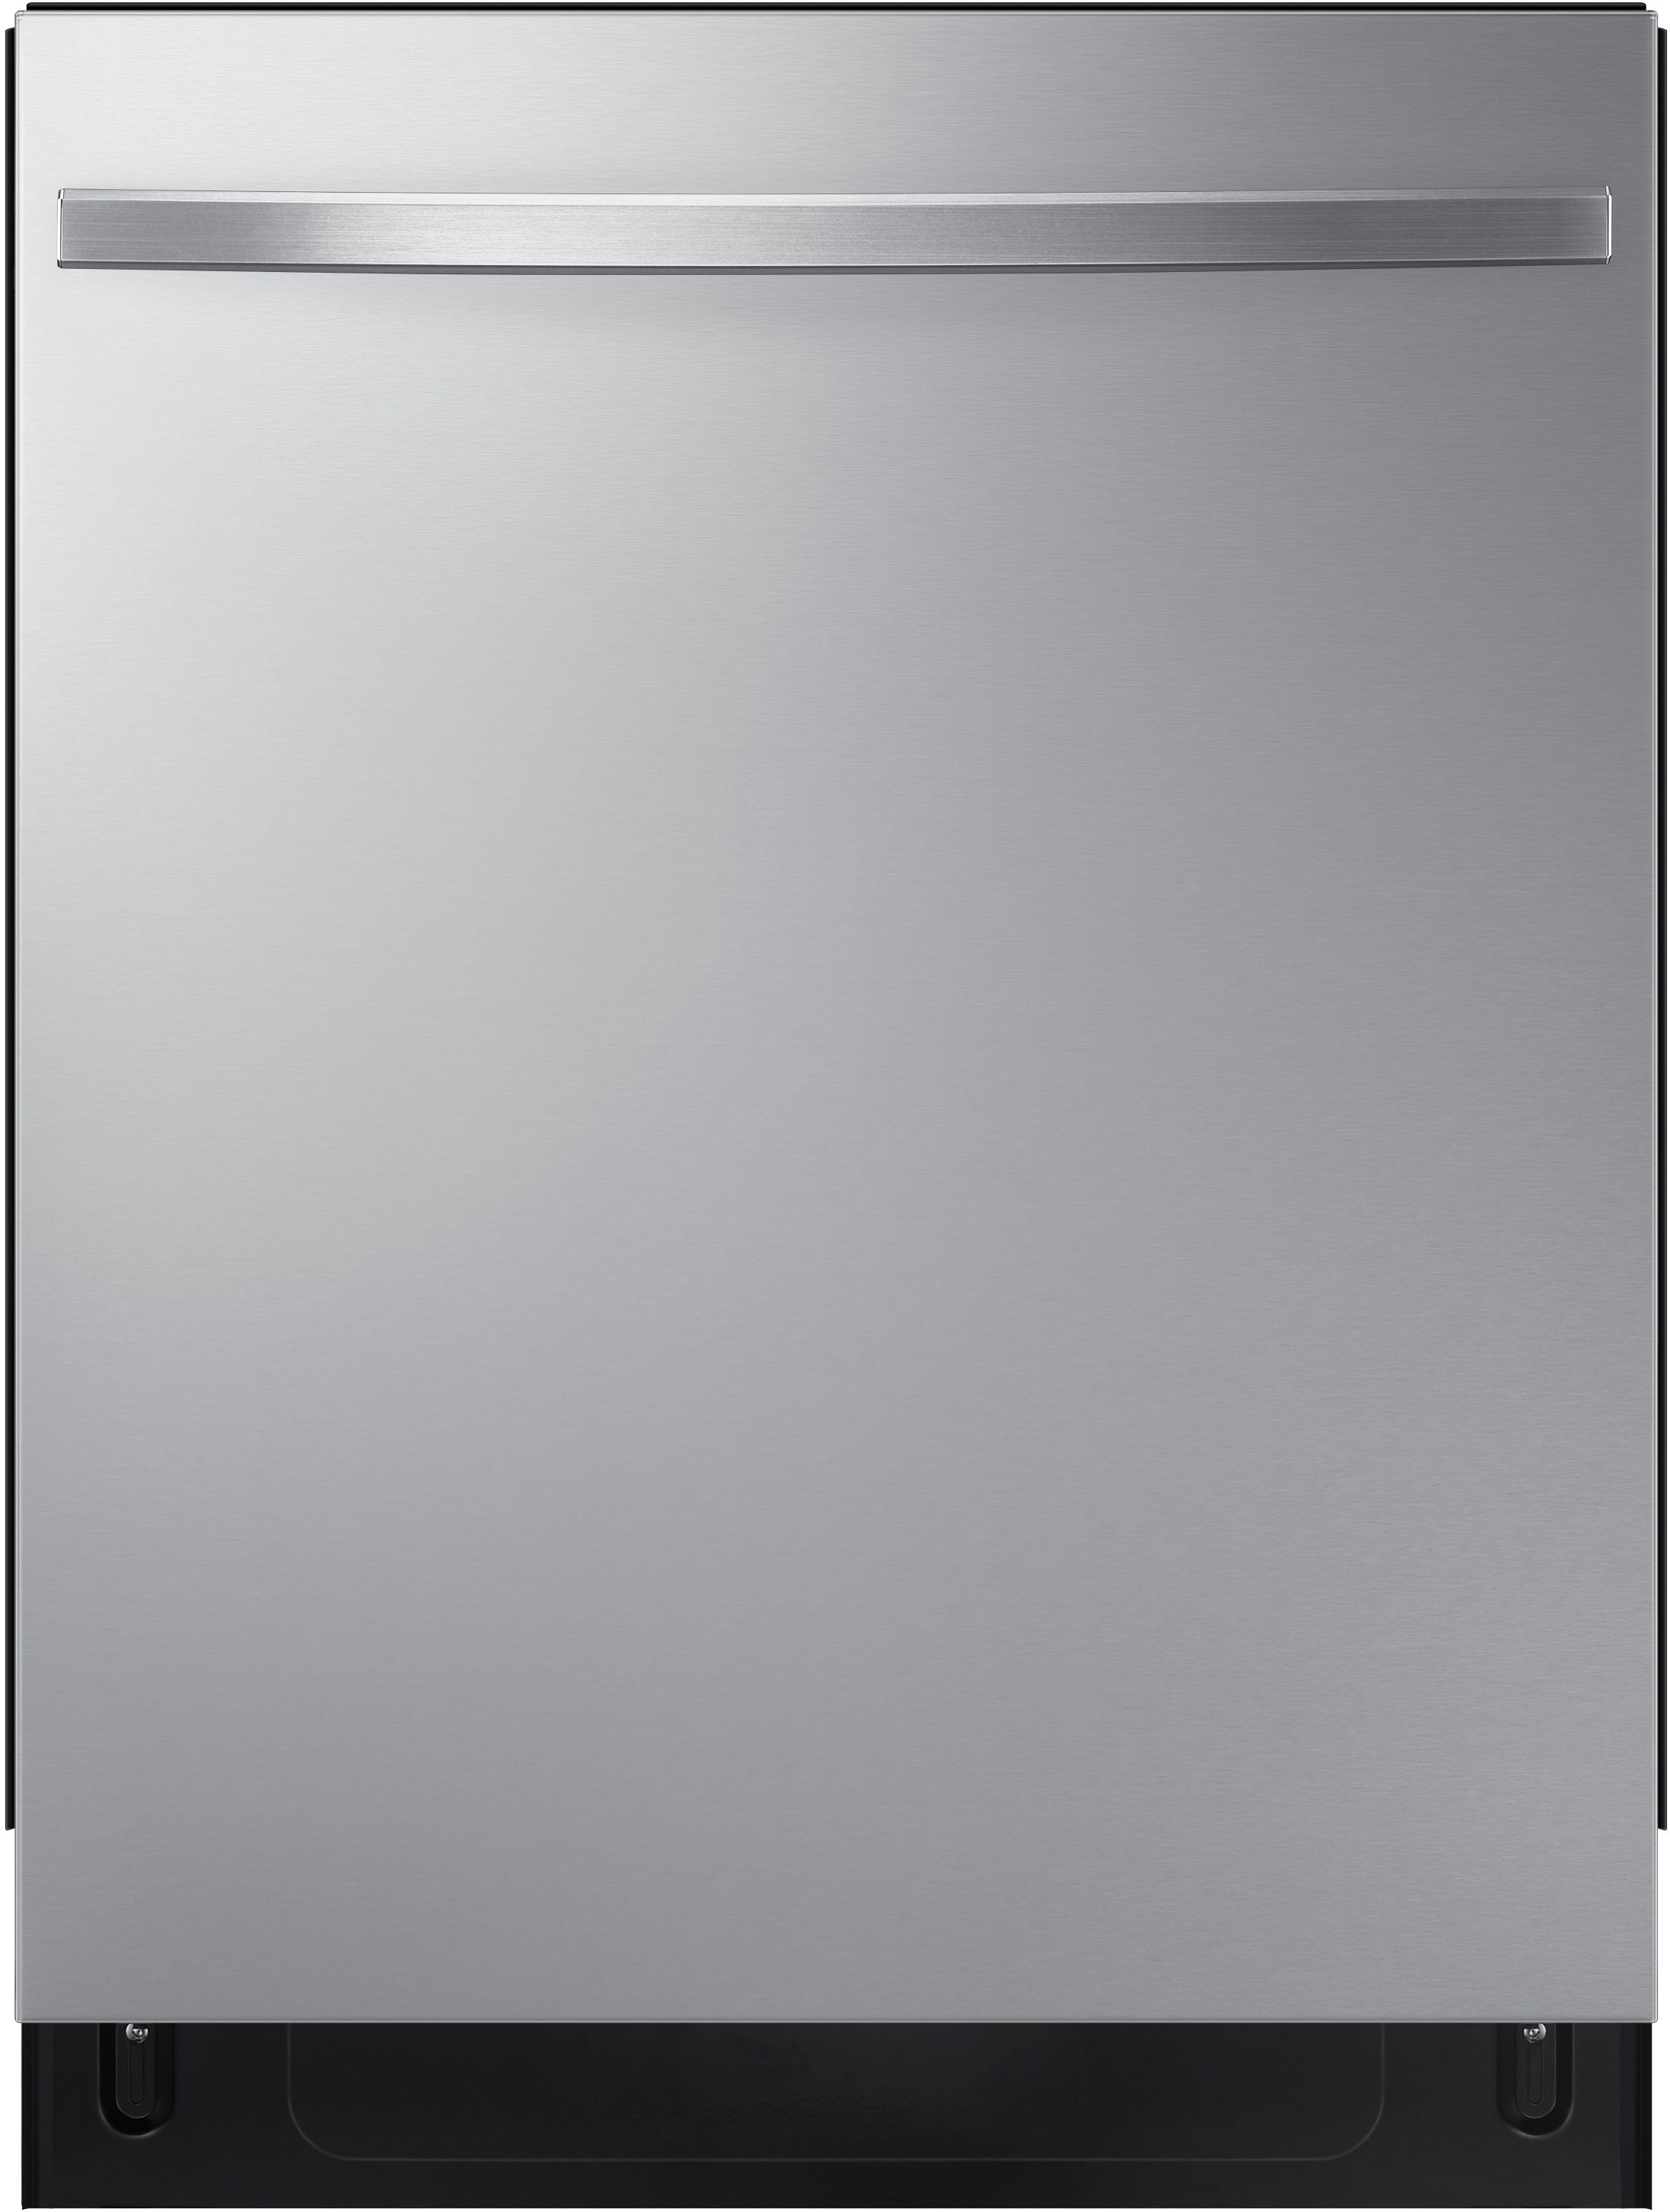 Samsung 24" Fingerprint Resistant Stainless Steel Built In Dishwasher